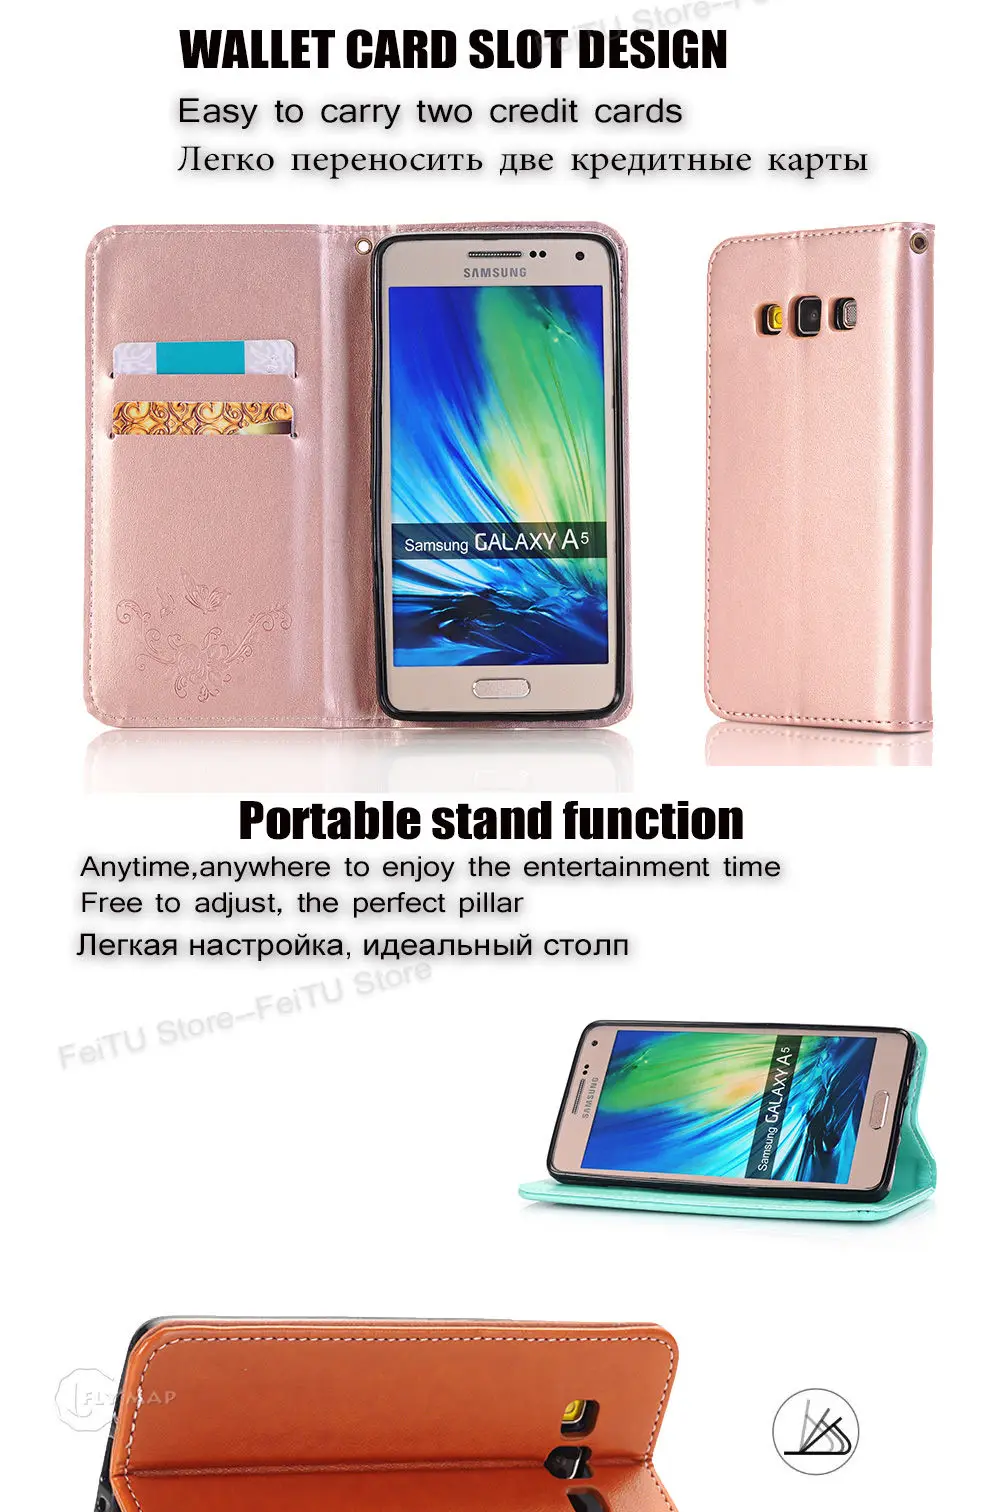 Флип-чехол для samsung Galaxy A5 SM A500 A500F A500H чехол для телефона кожаный чехол для samsung A 5 SM-A500F SM-A500H Coque